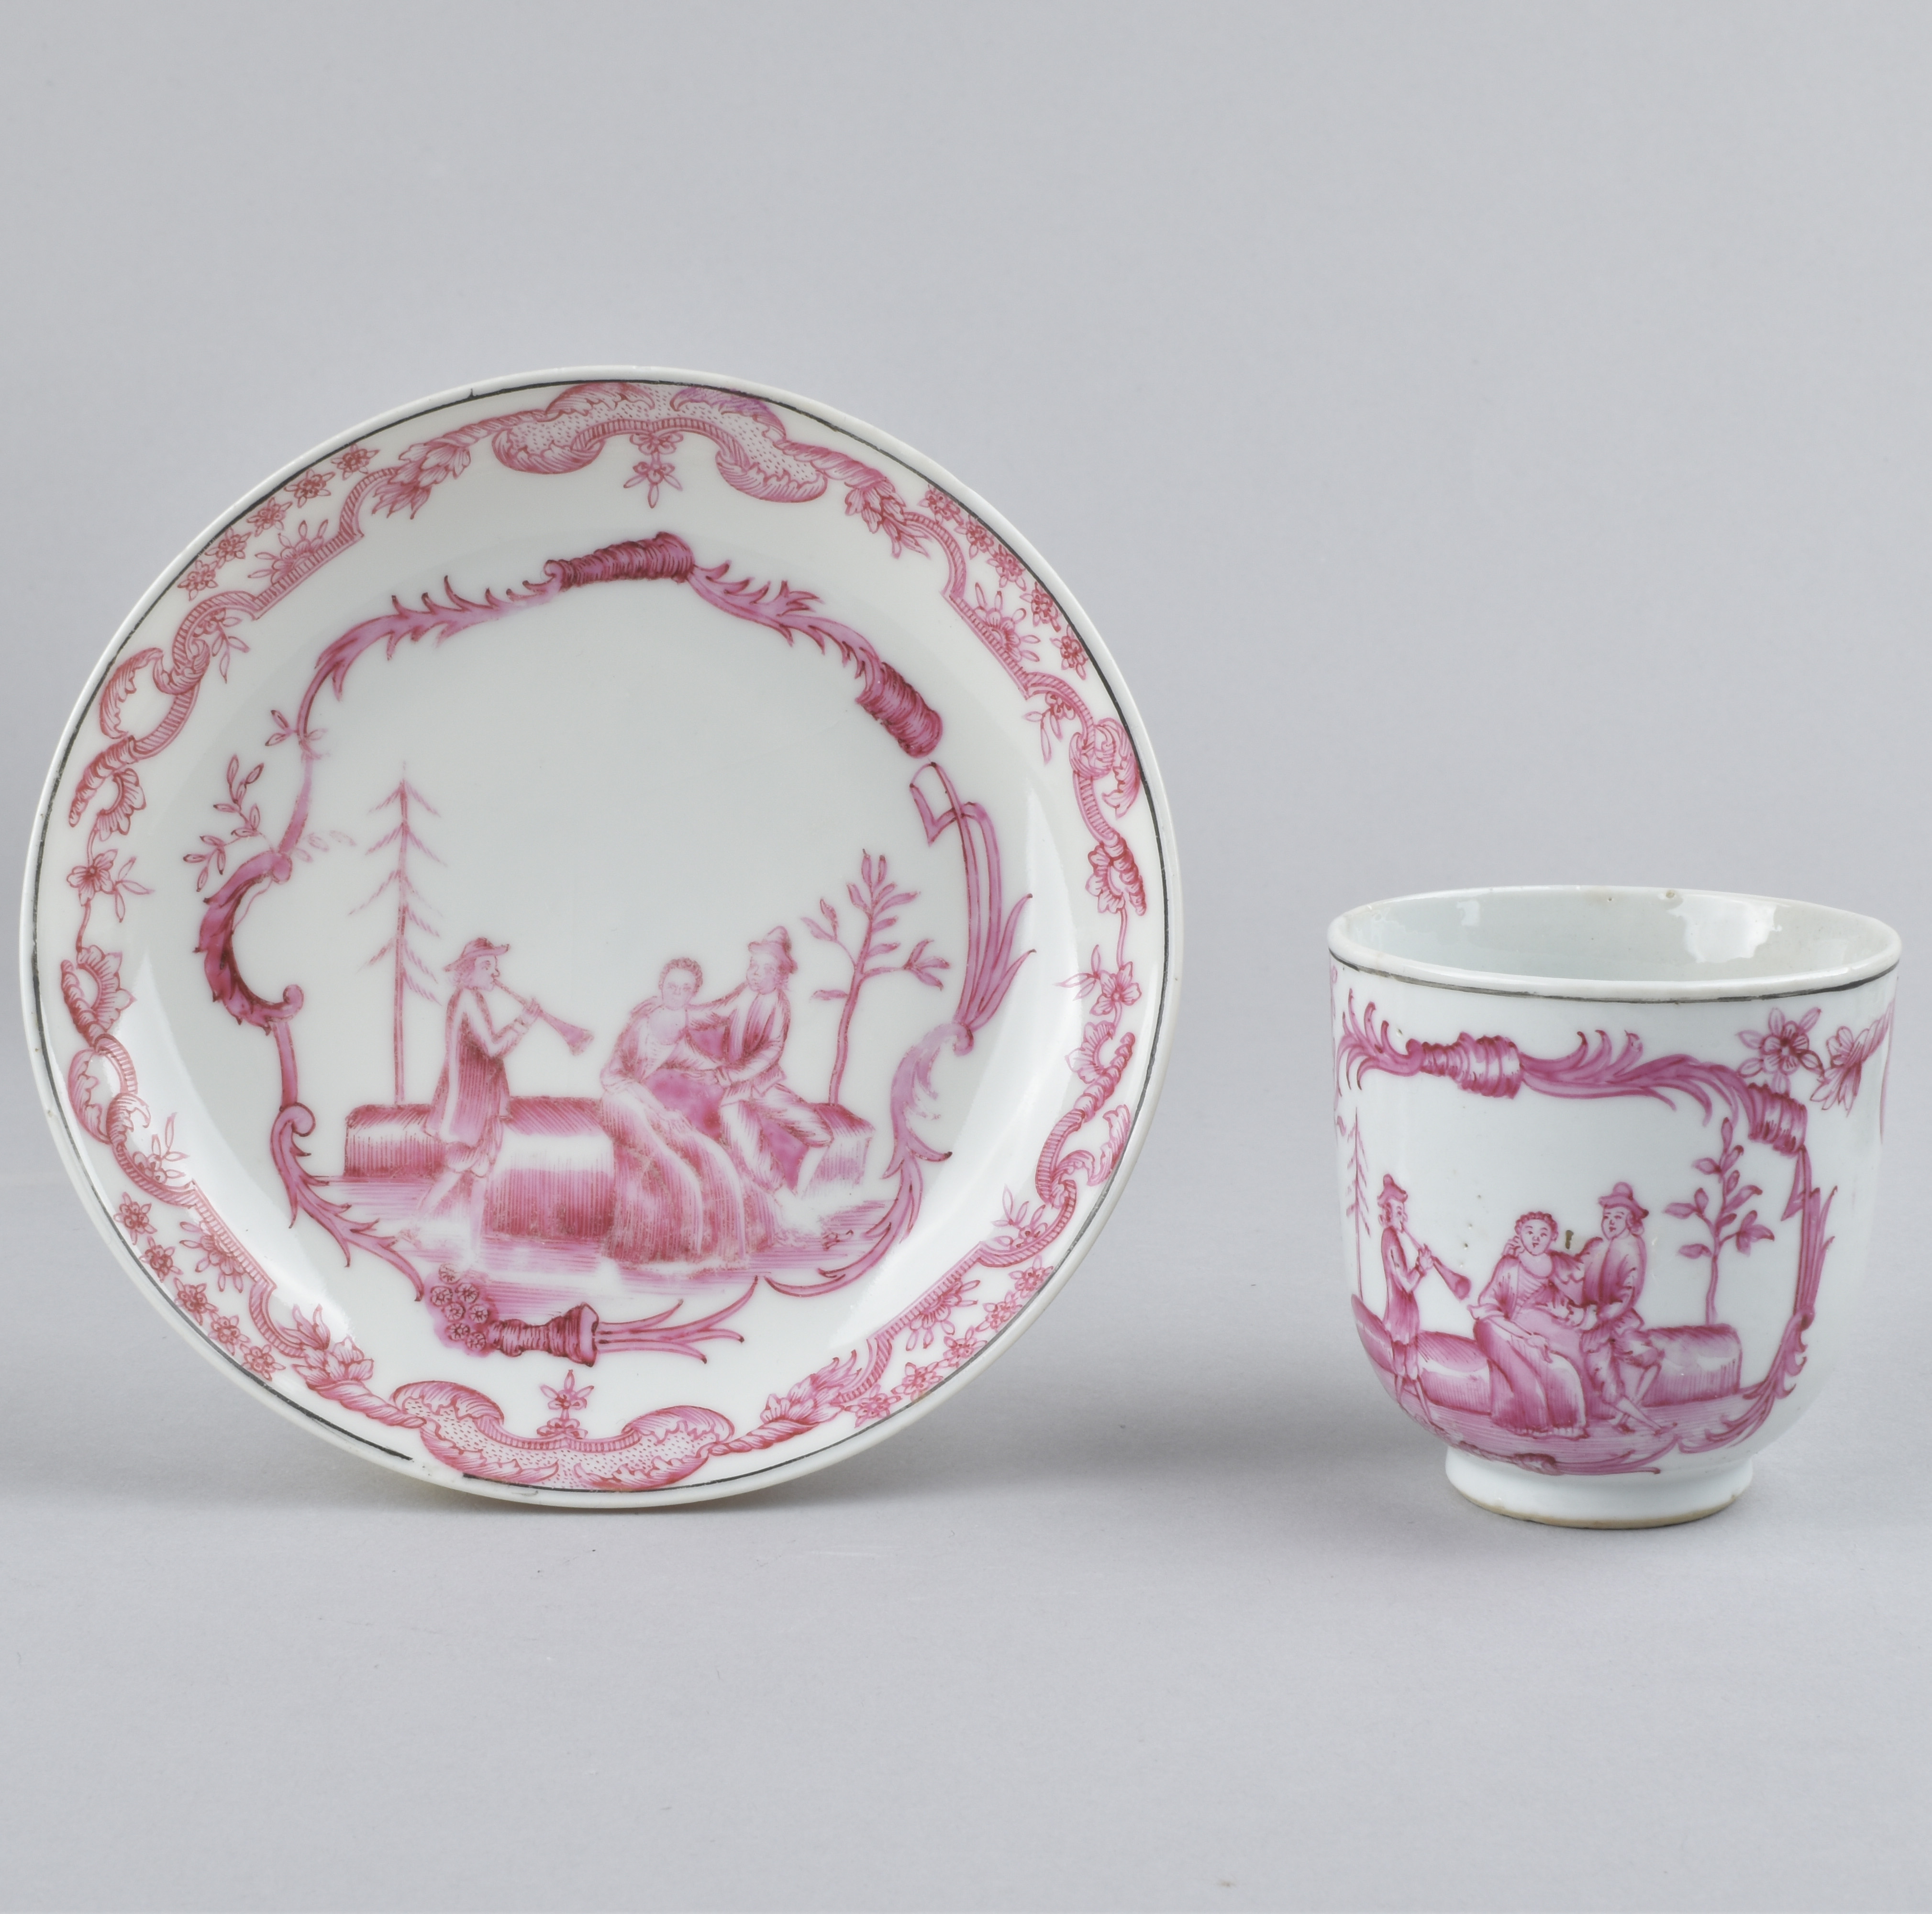 Porcelaine Qianlong (1735-1795), ca. 1745, Chine